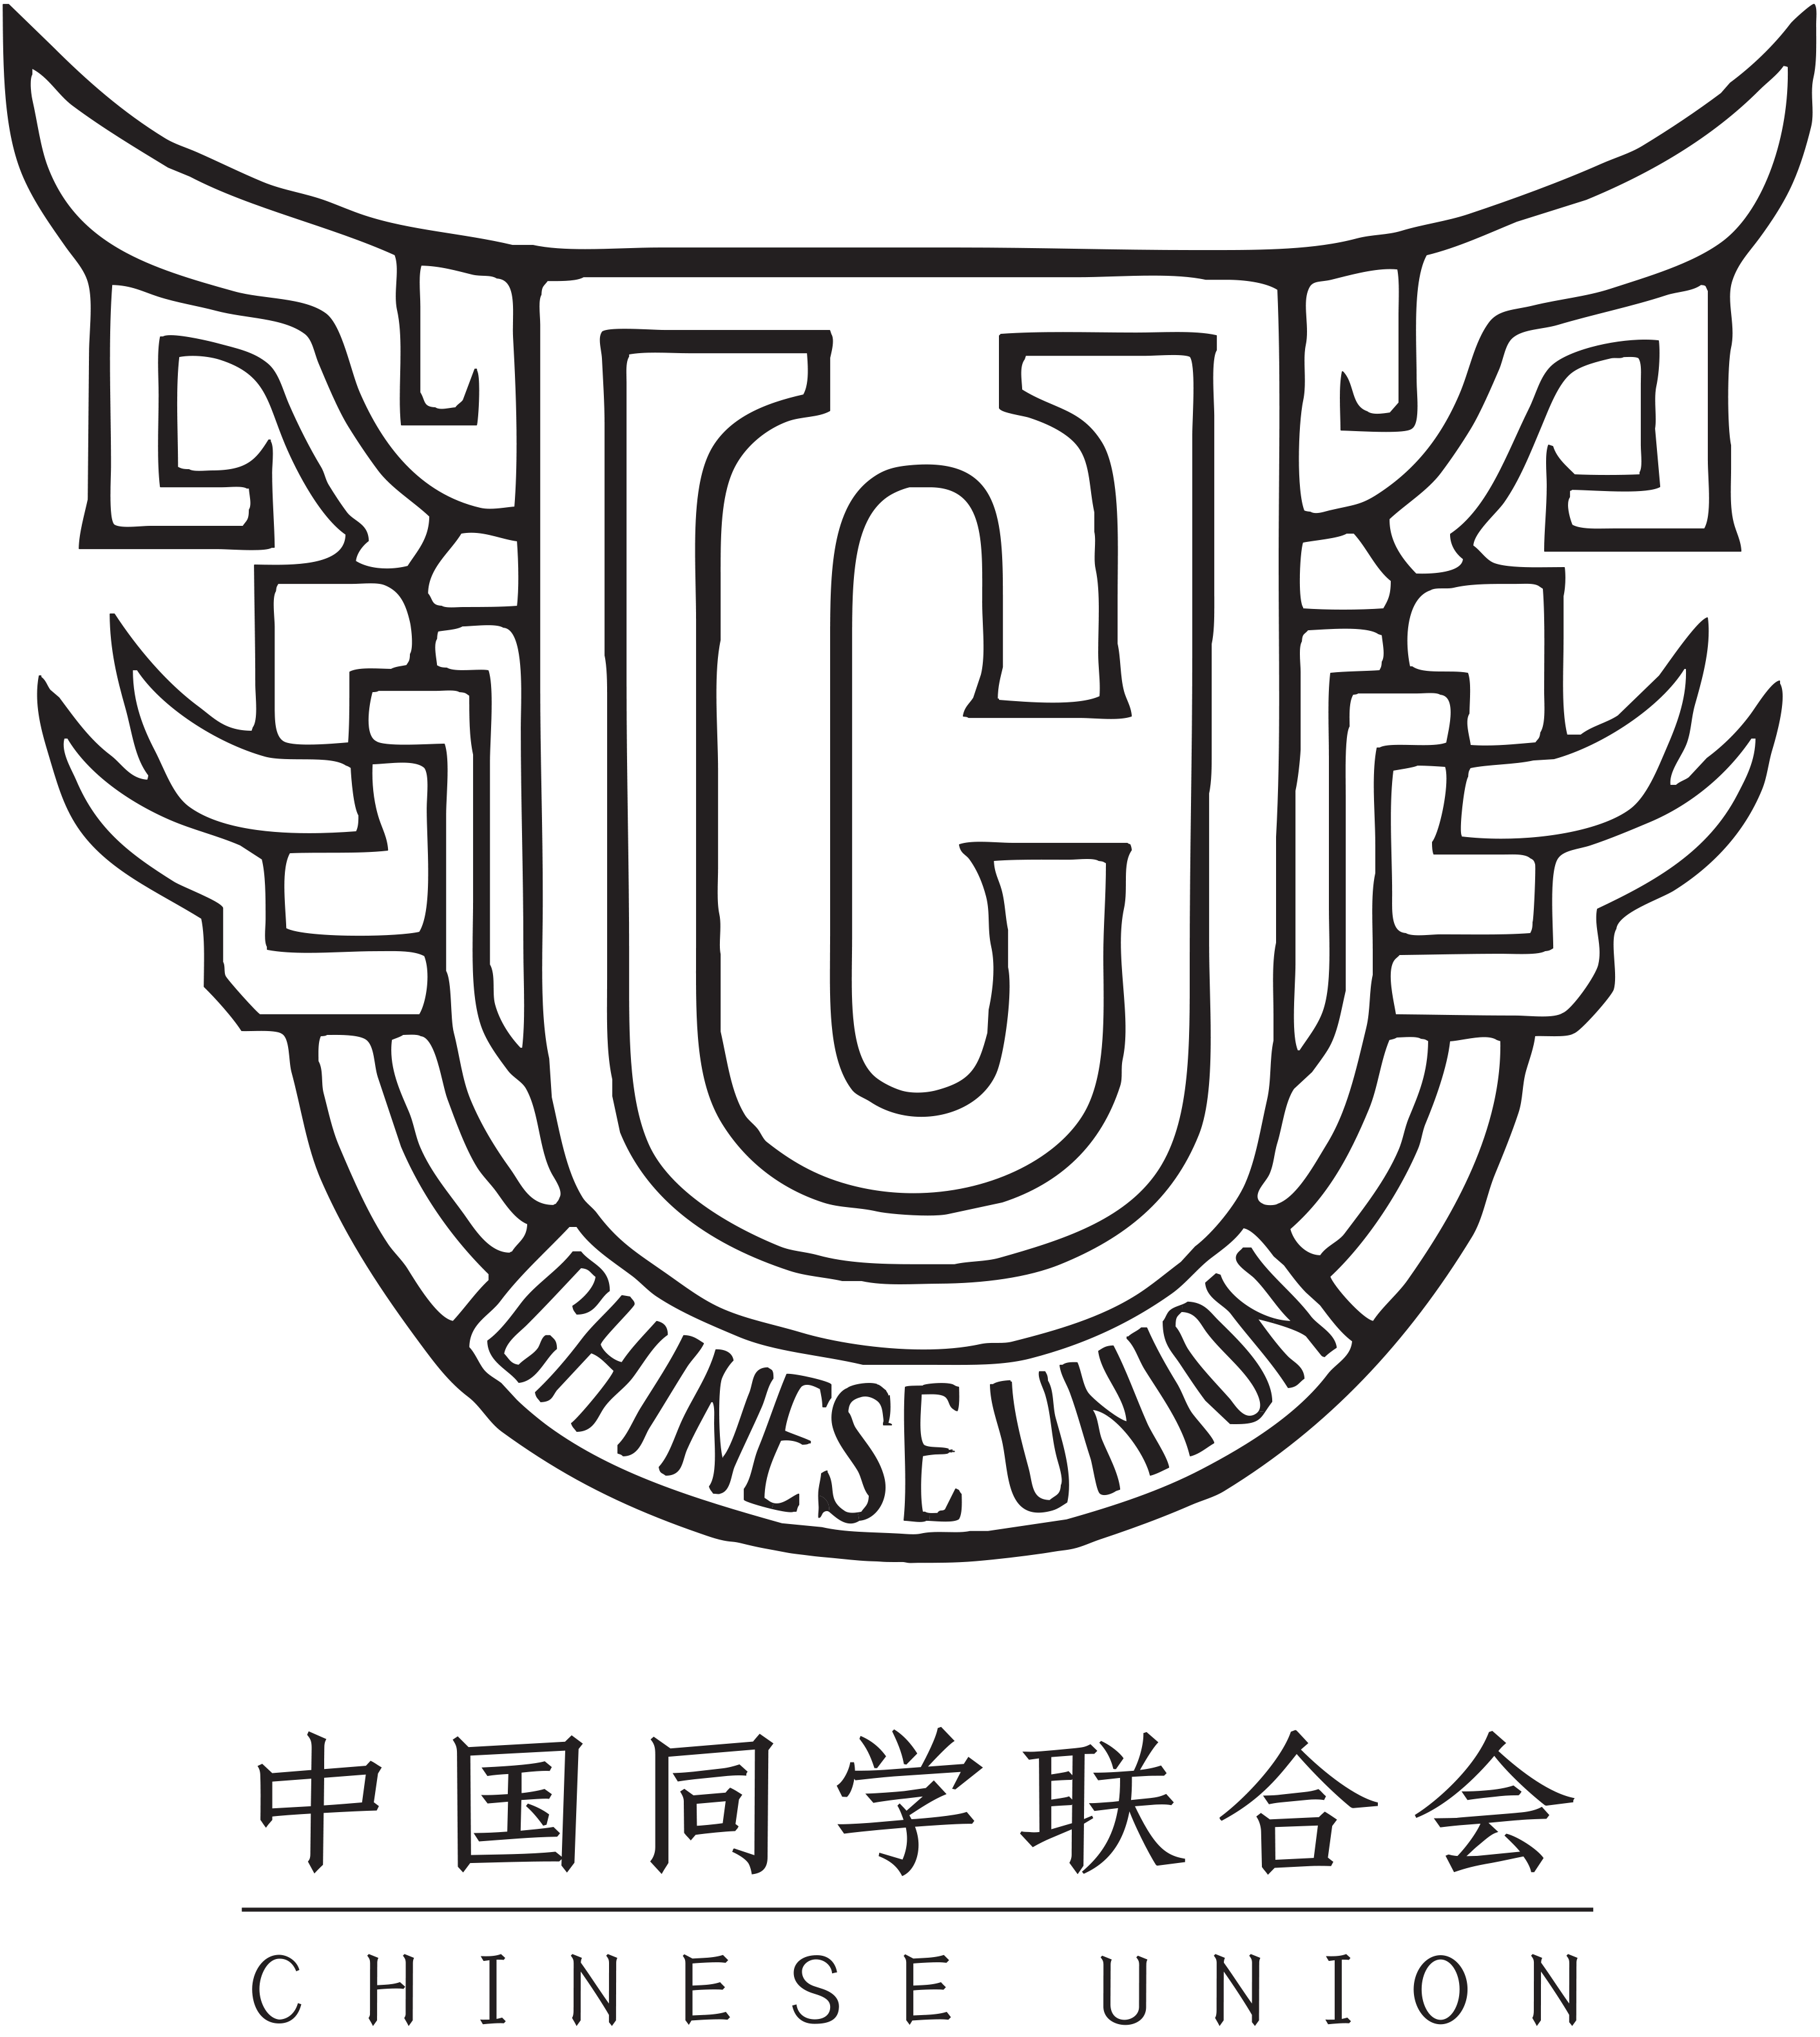 Chinese Union